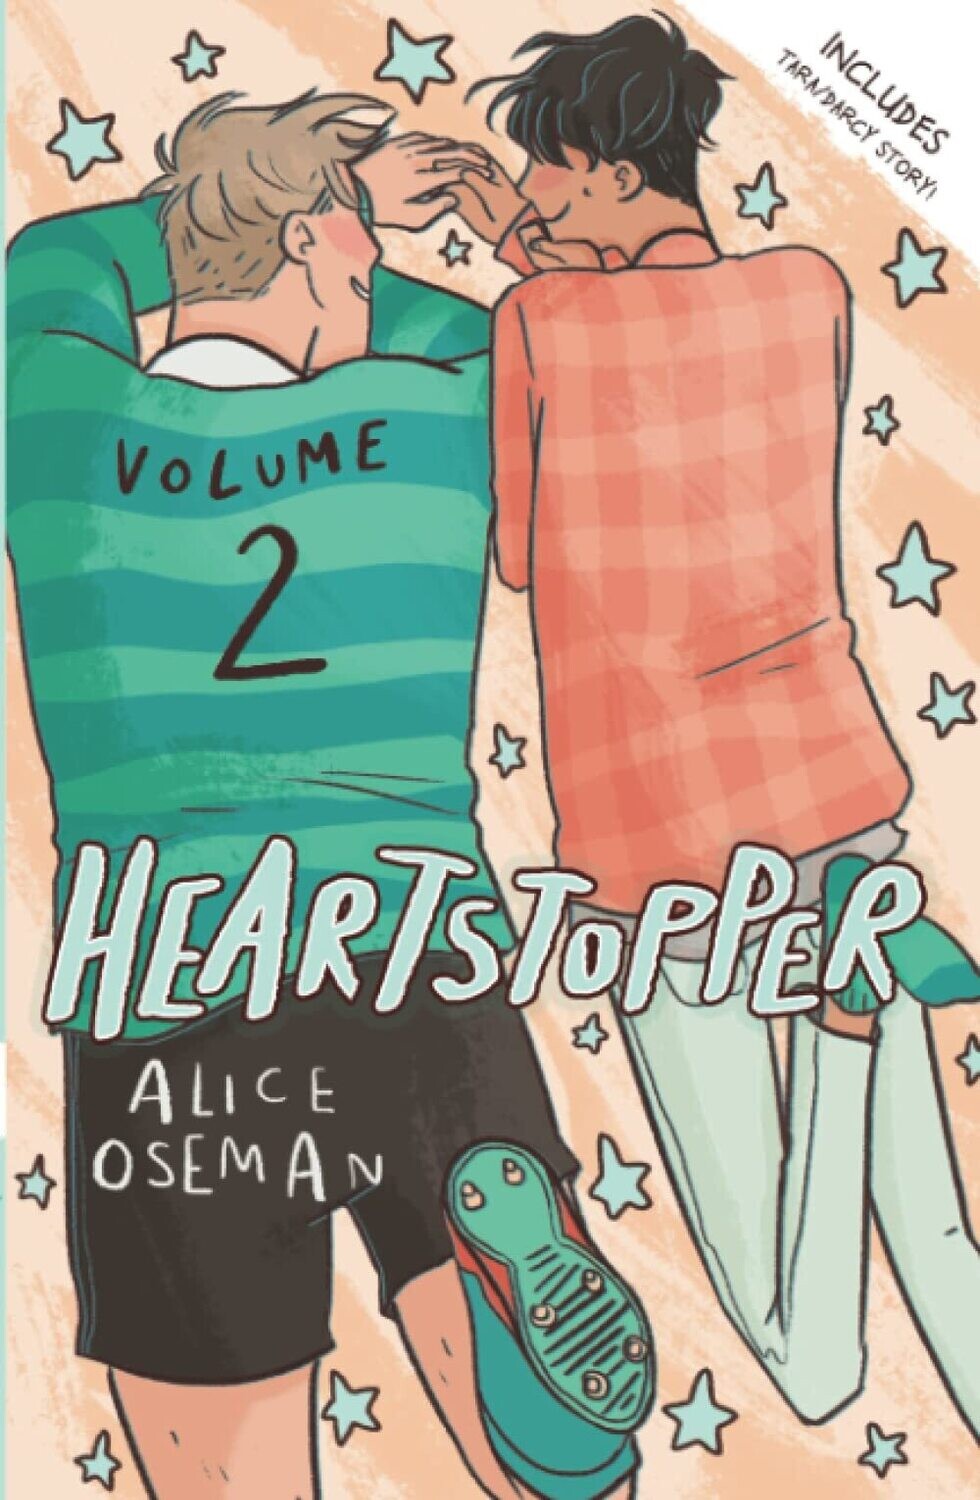 Alice Oseman  Creator of the million-copy bestselling Heartstopper books